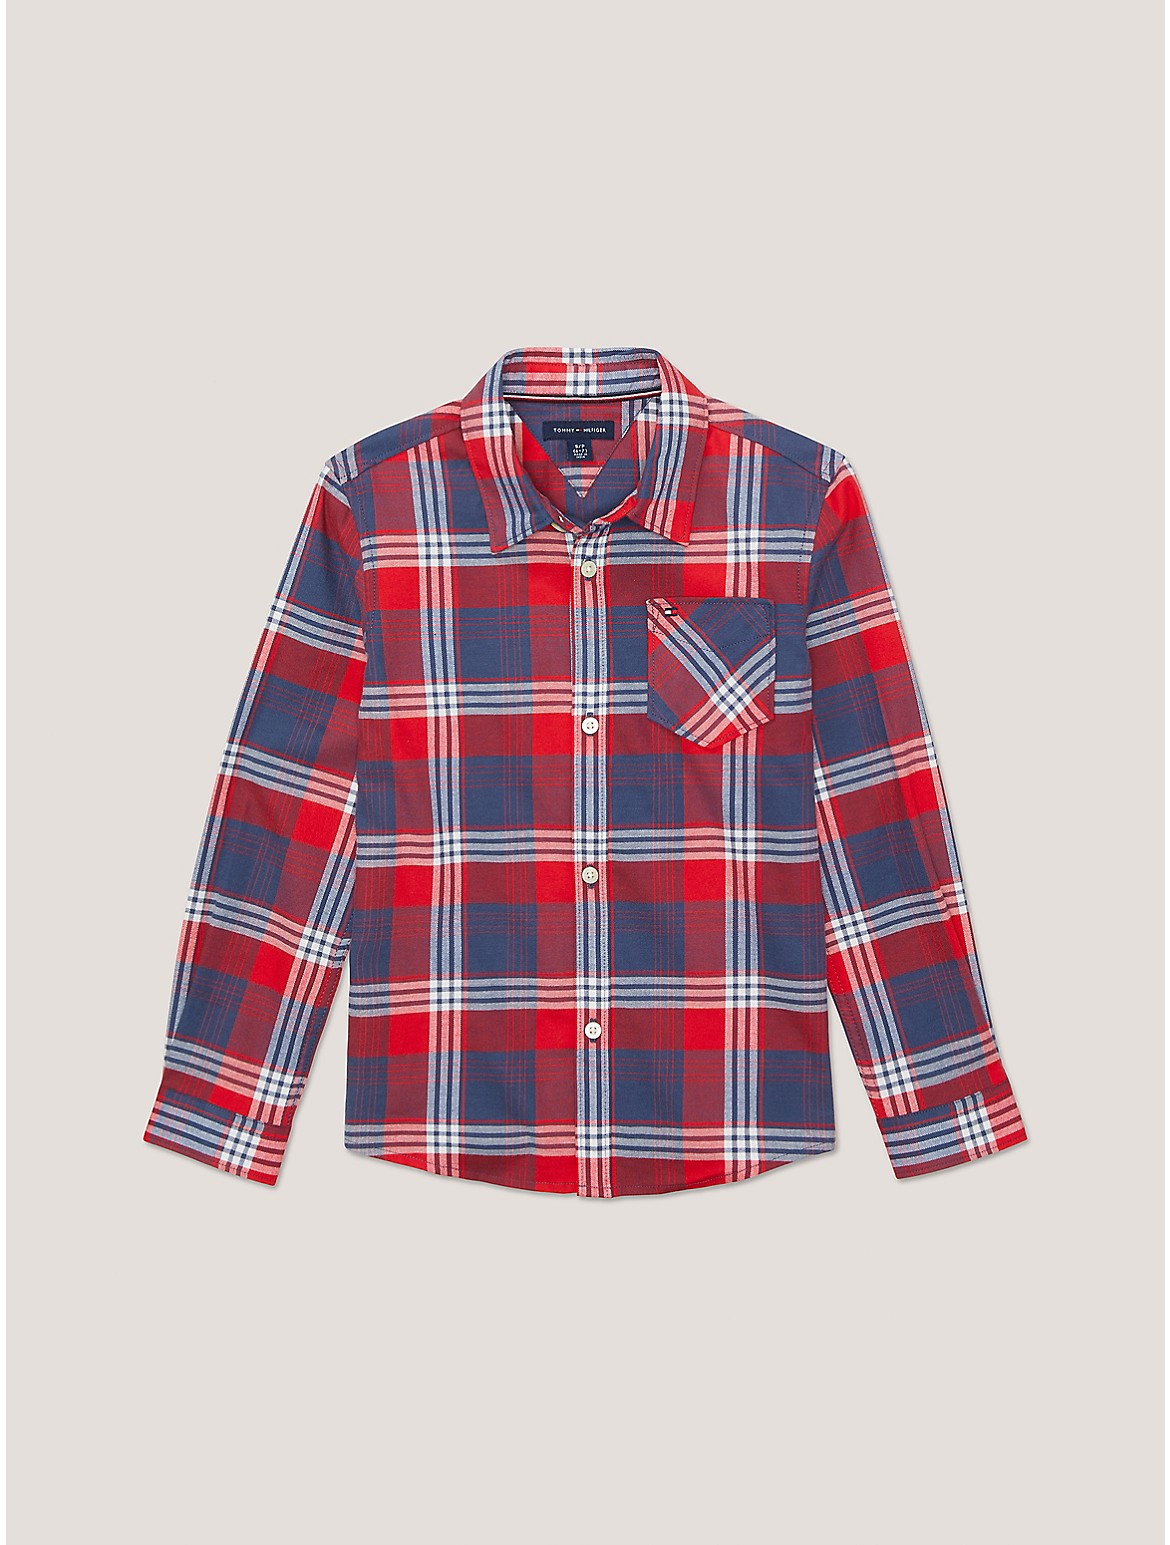 Tommy Hilfiger Boys' Kids' Plaid Shirt - Red - XL